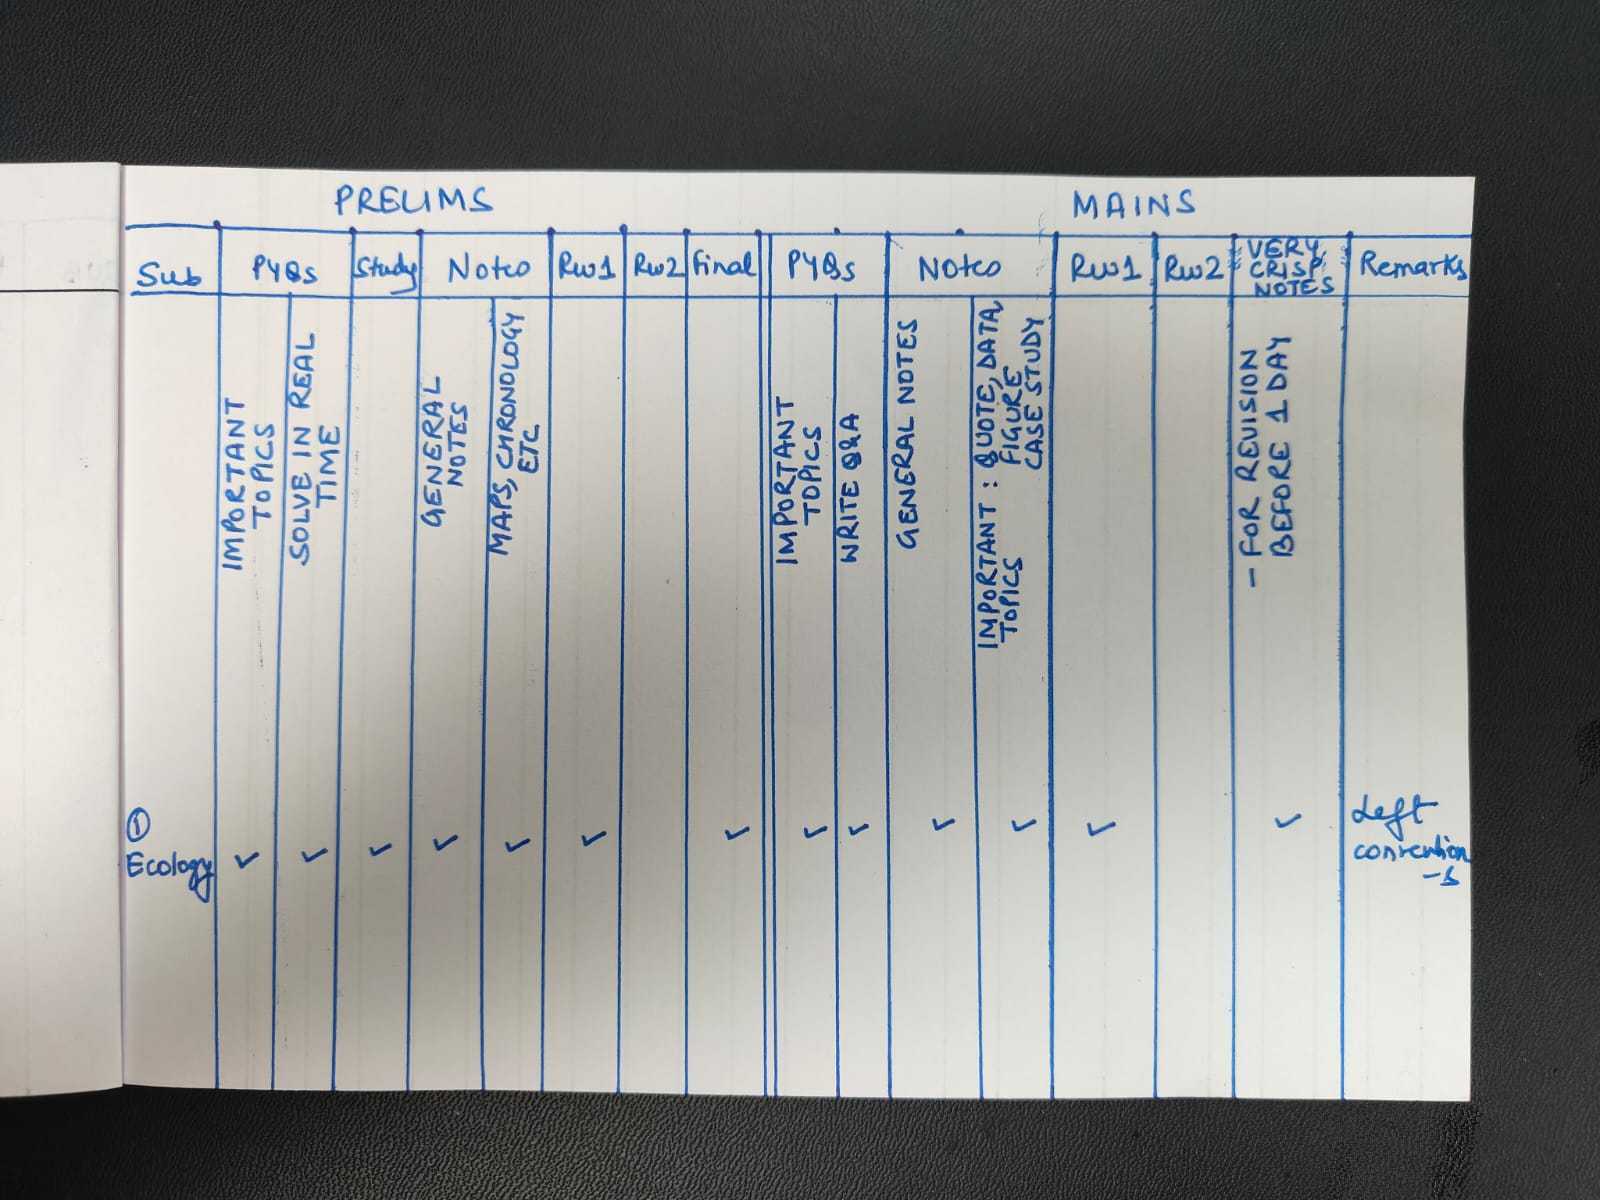 Taruni's hand-drawn timetable